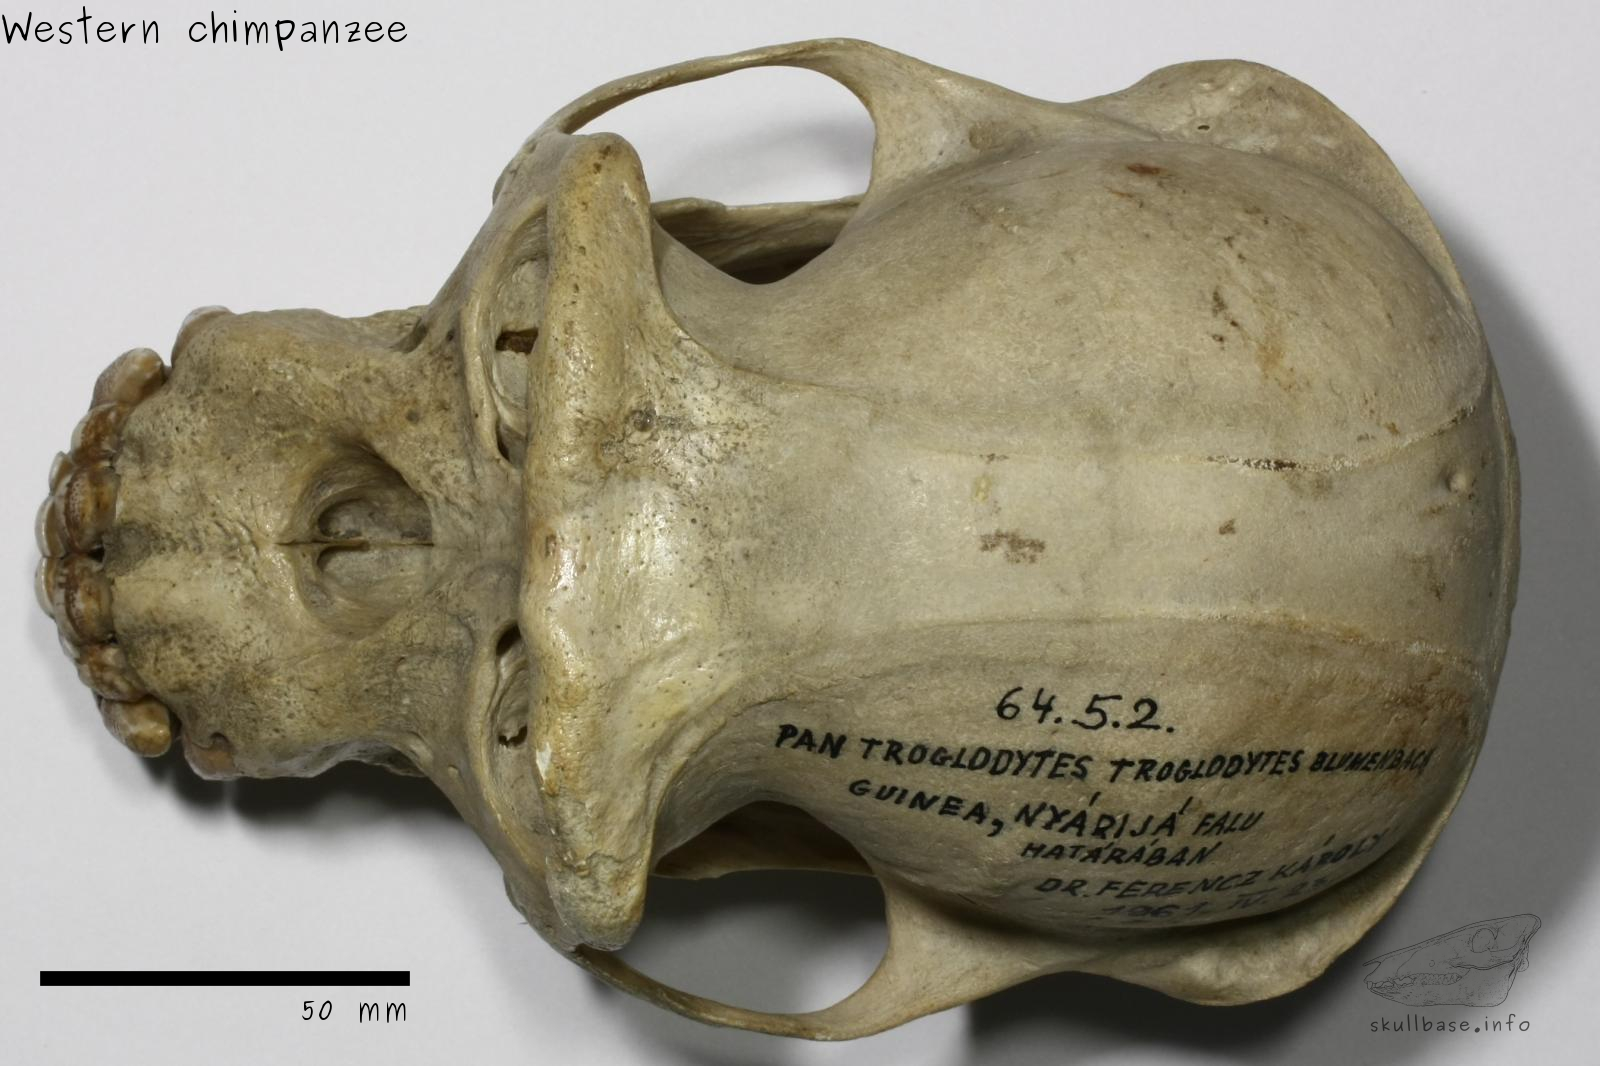 Western chimpanzee (Pan troglodytes verus) skull dorsal view